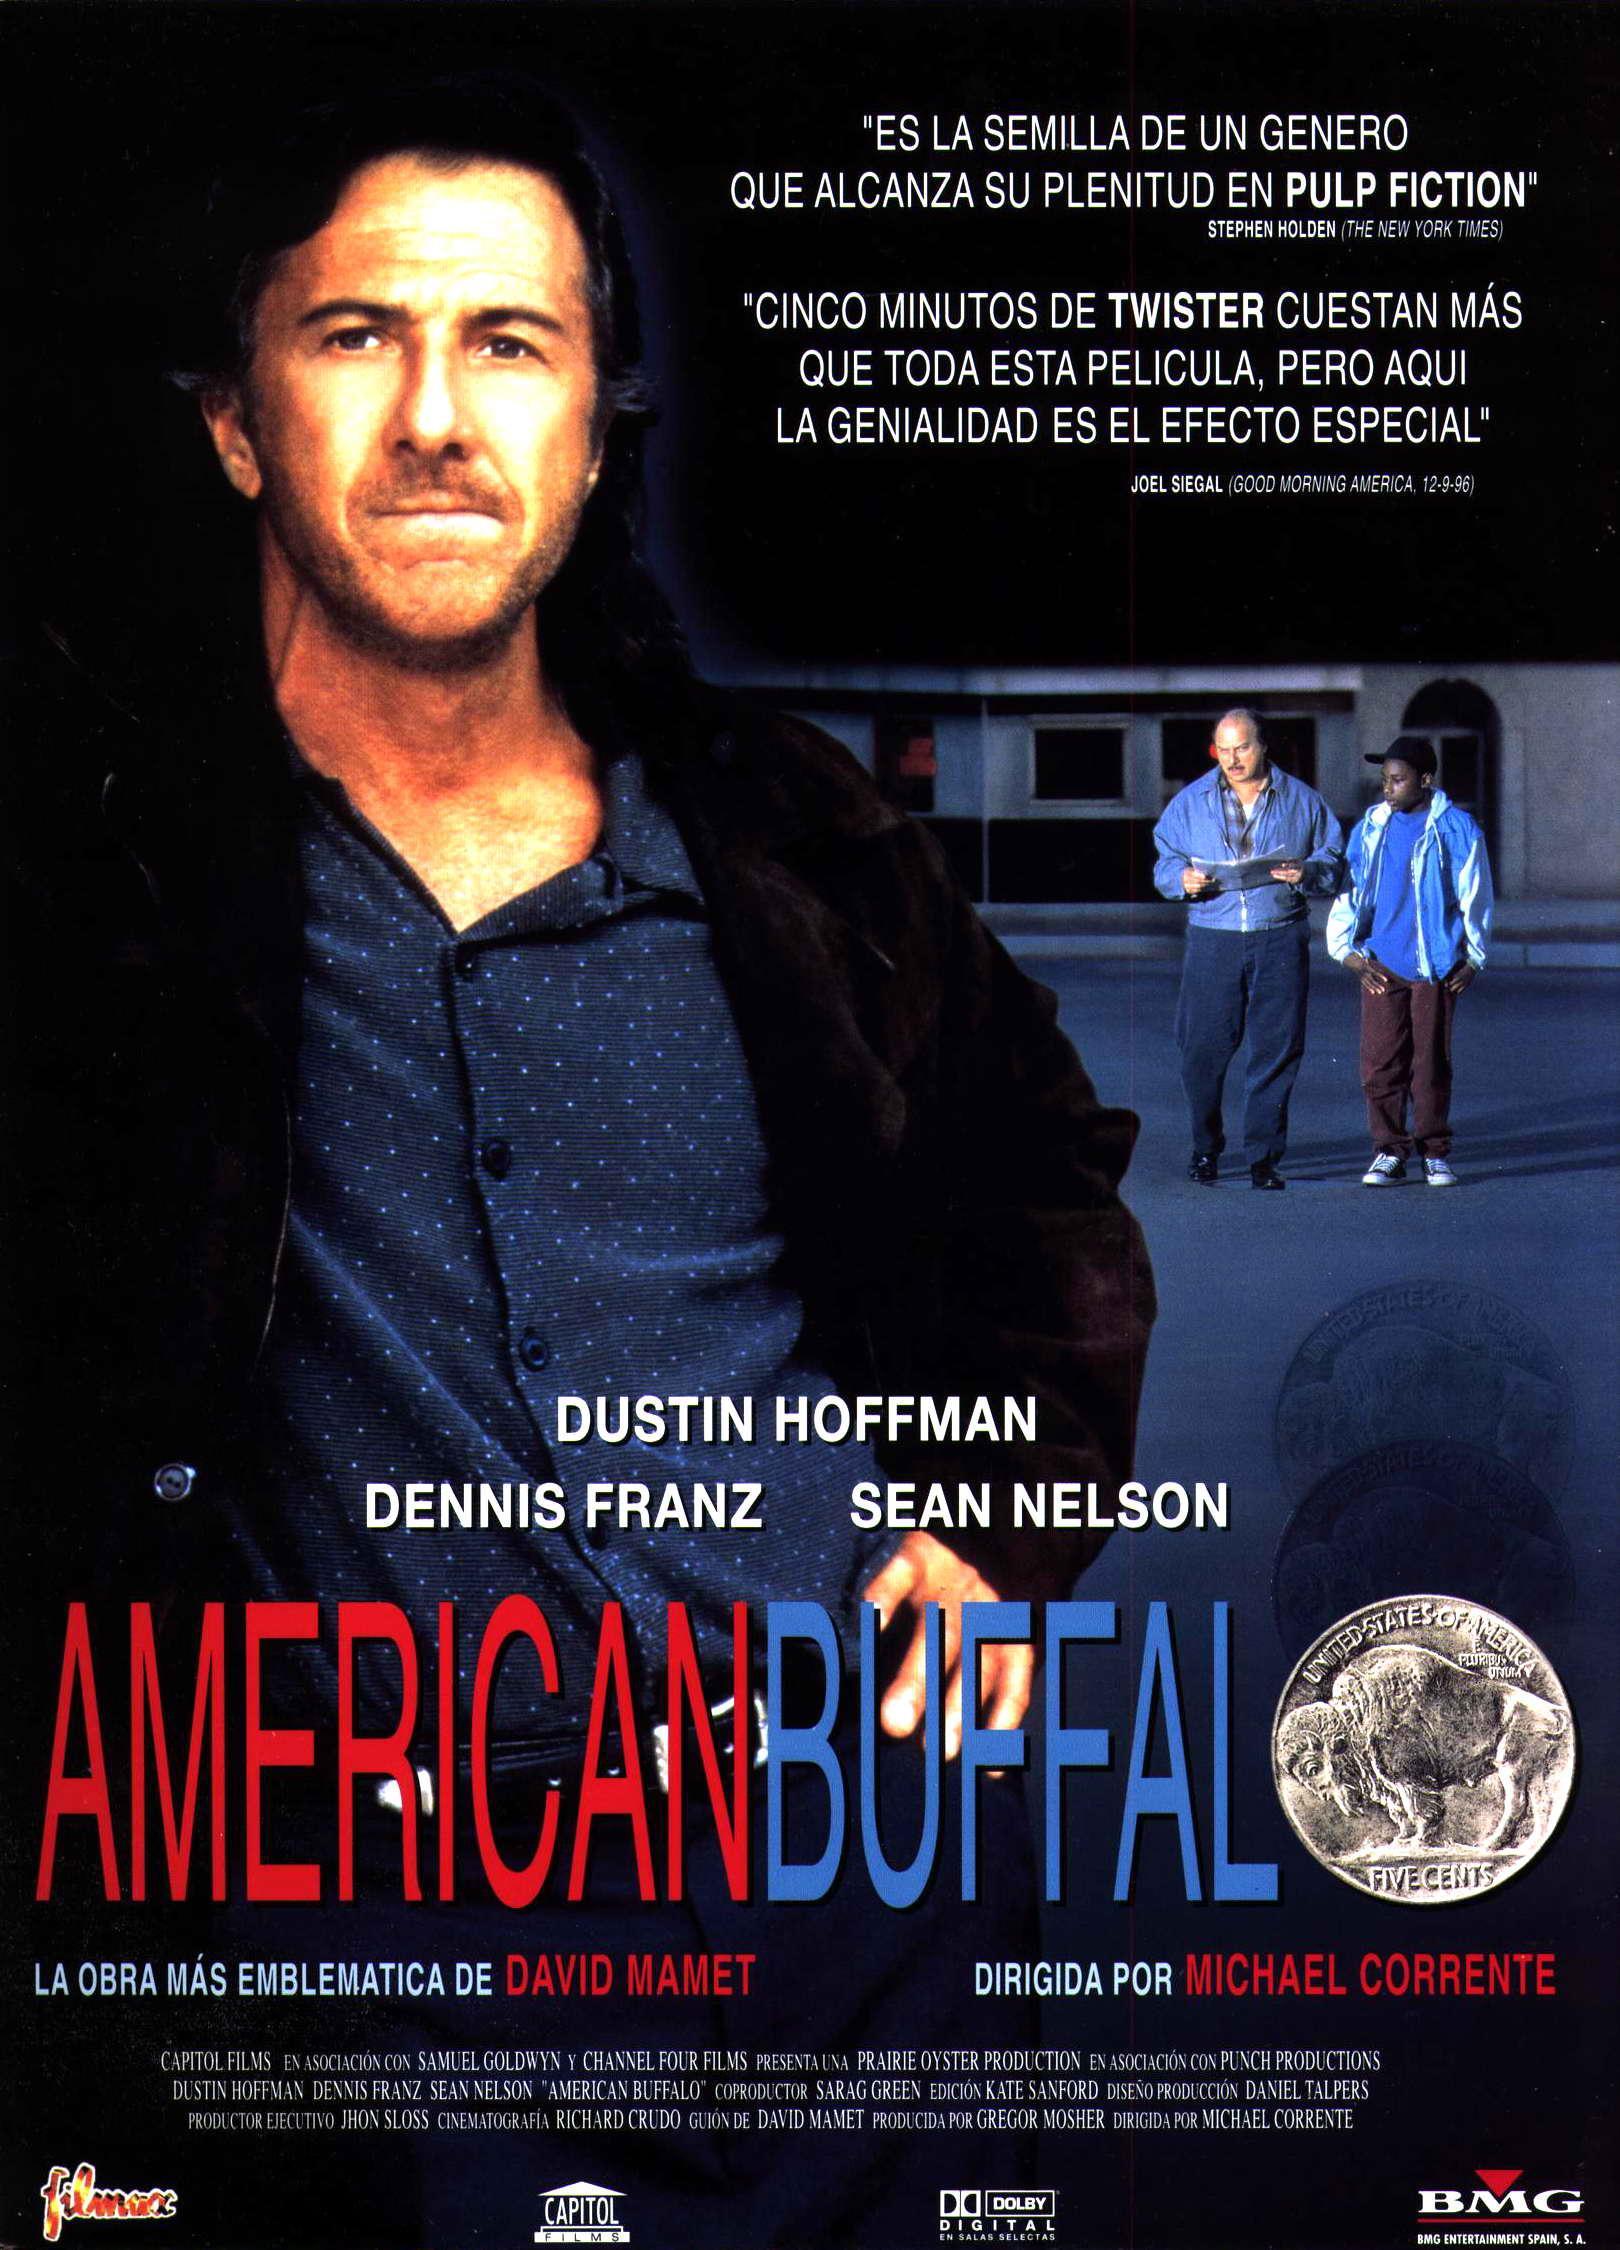 Постер фильма Американский бизон | American Buffalo